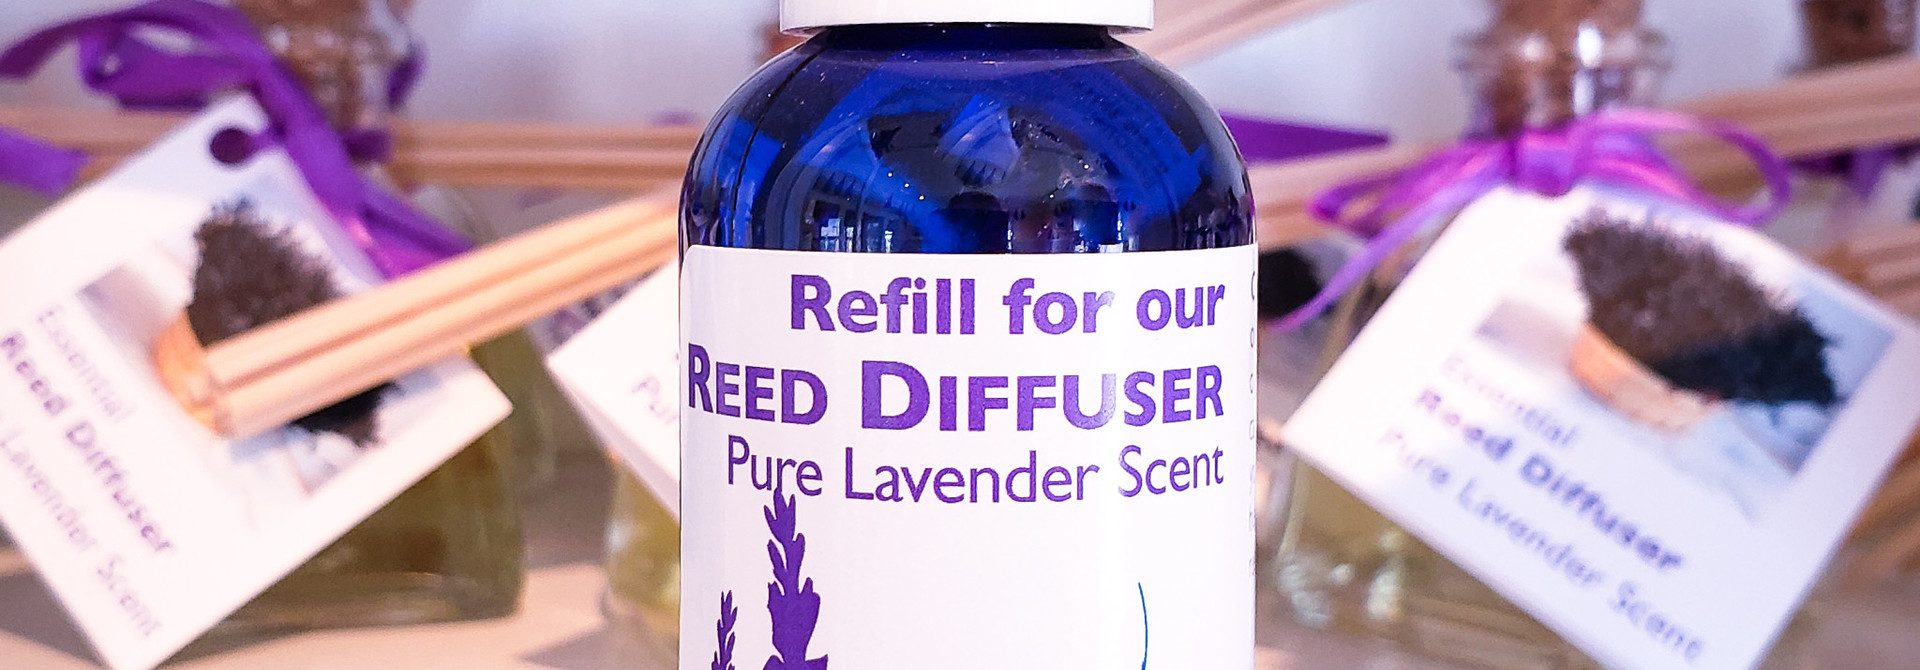 Essential Reed Diffuser - 2.5 oz Lavender Scent